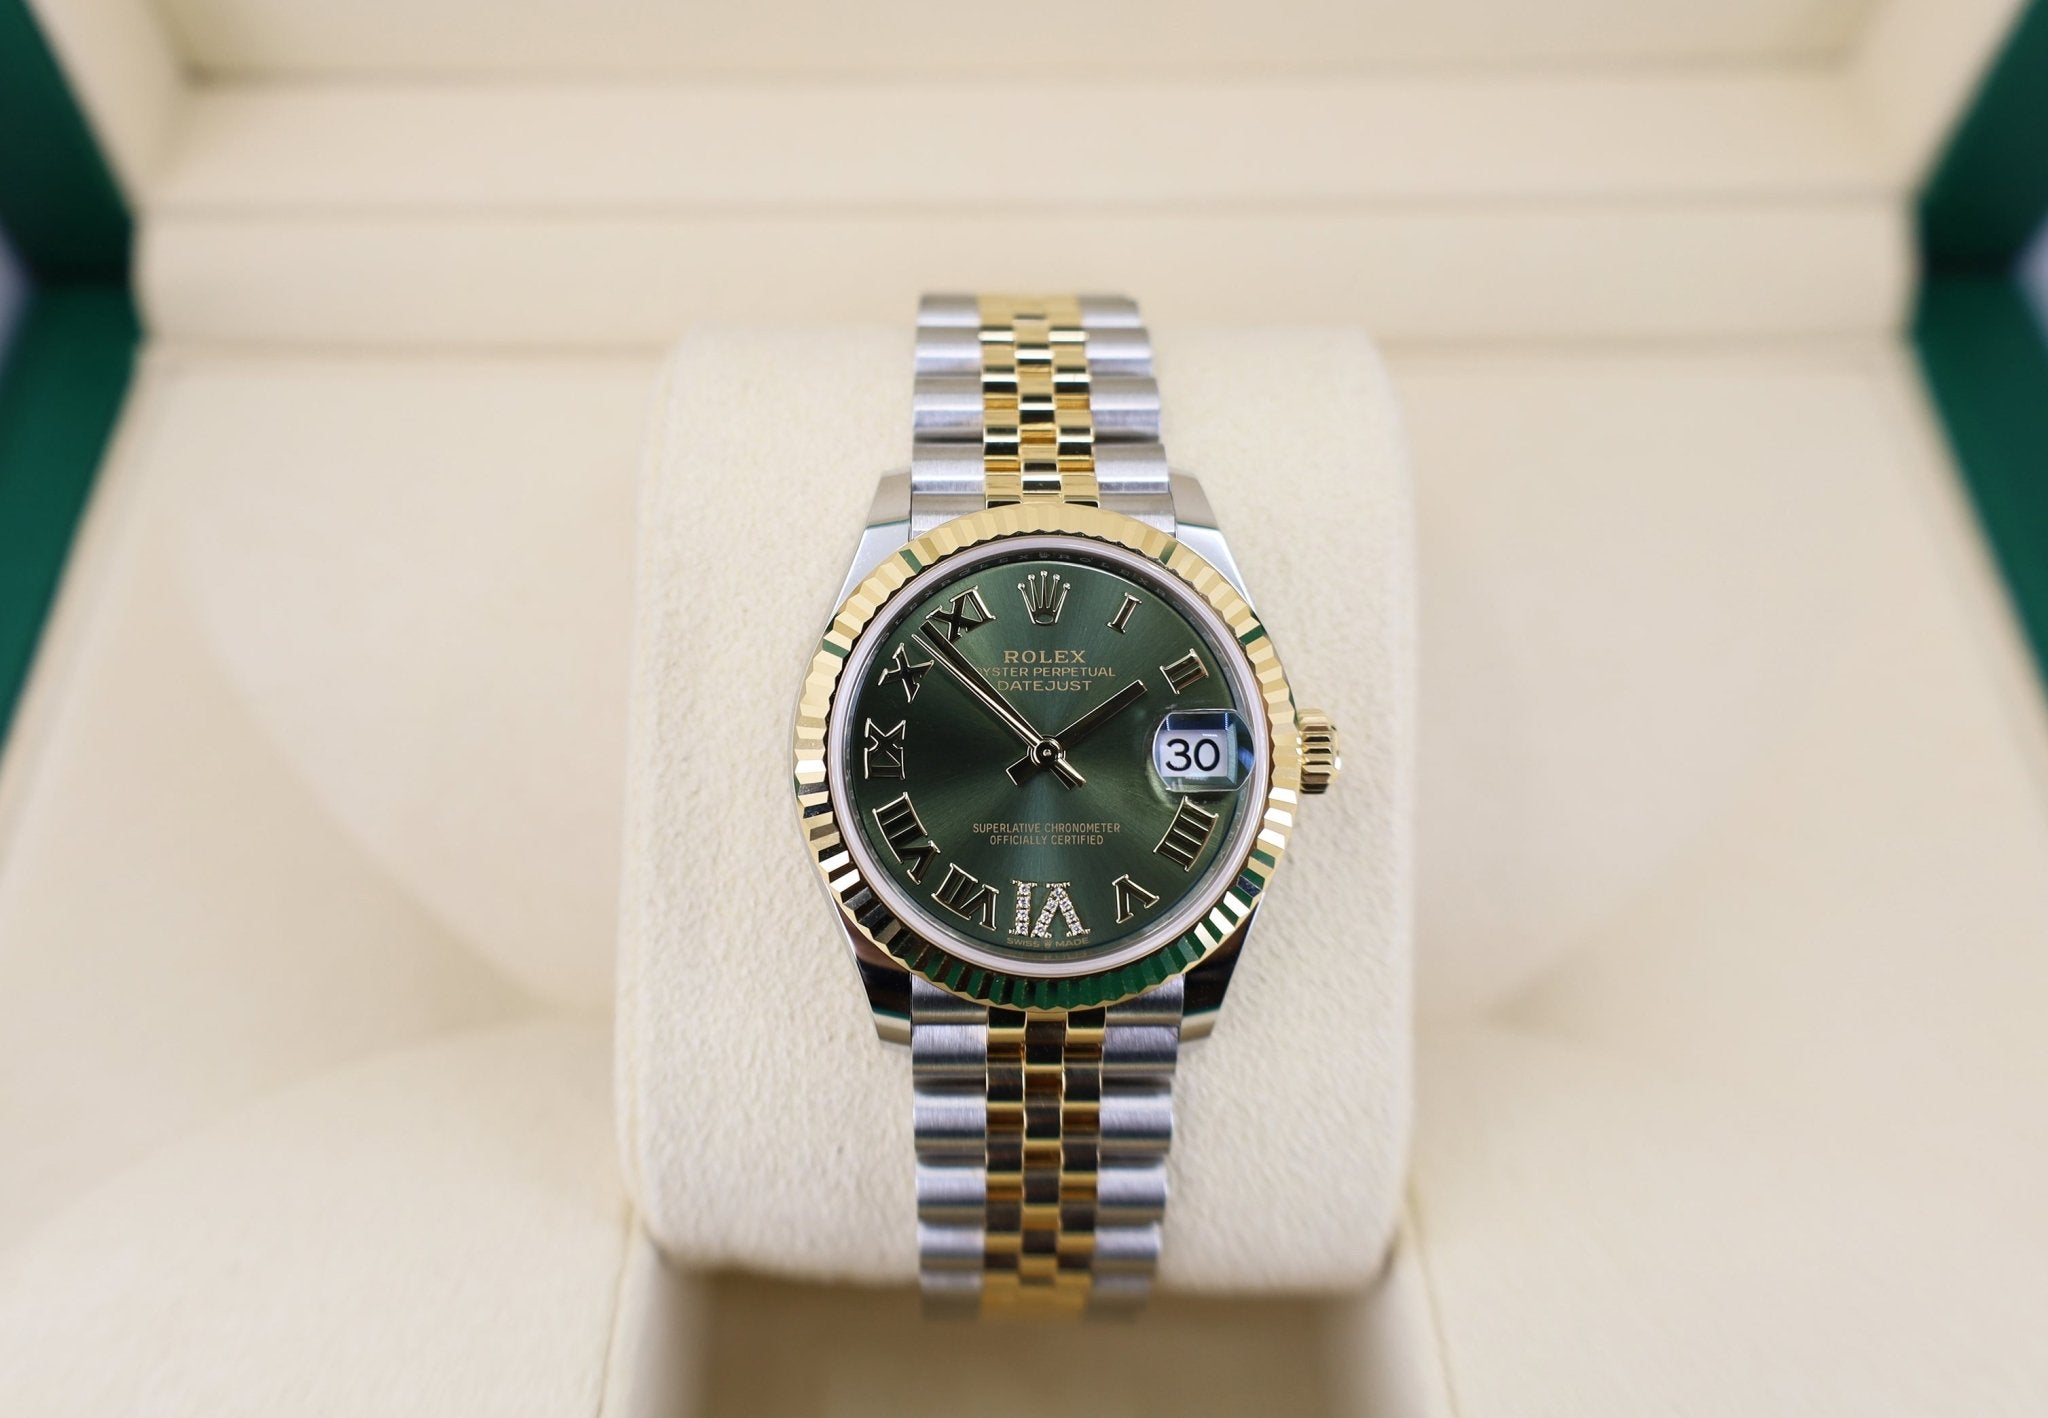 Rolex Mens DateJust 36 Green Diamond Watch Steel and 18k Gold